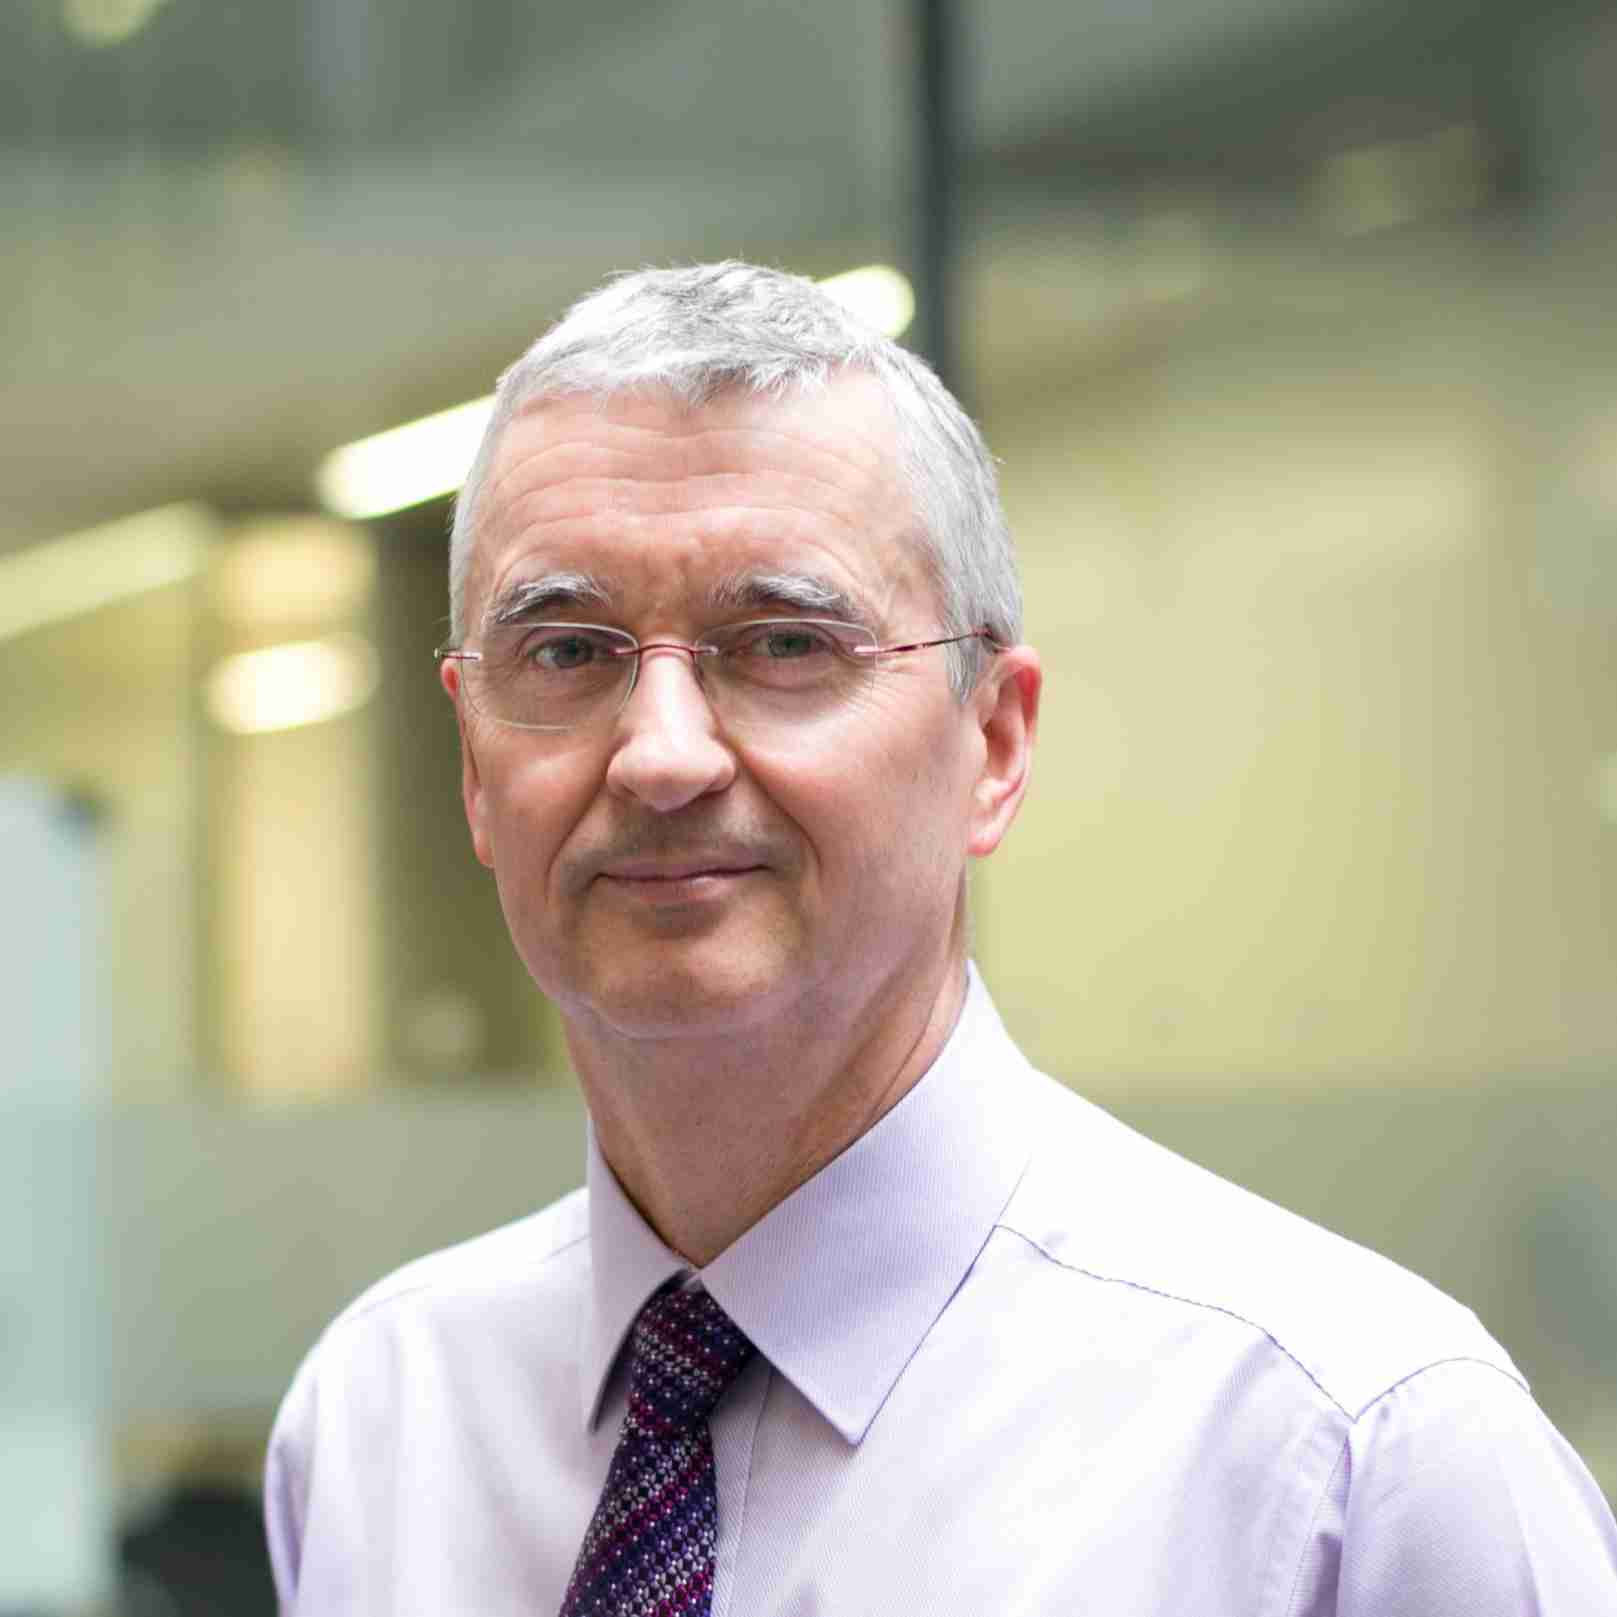 Profile image of Dr Dave Nicholls